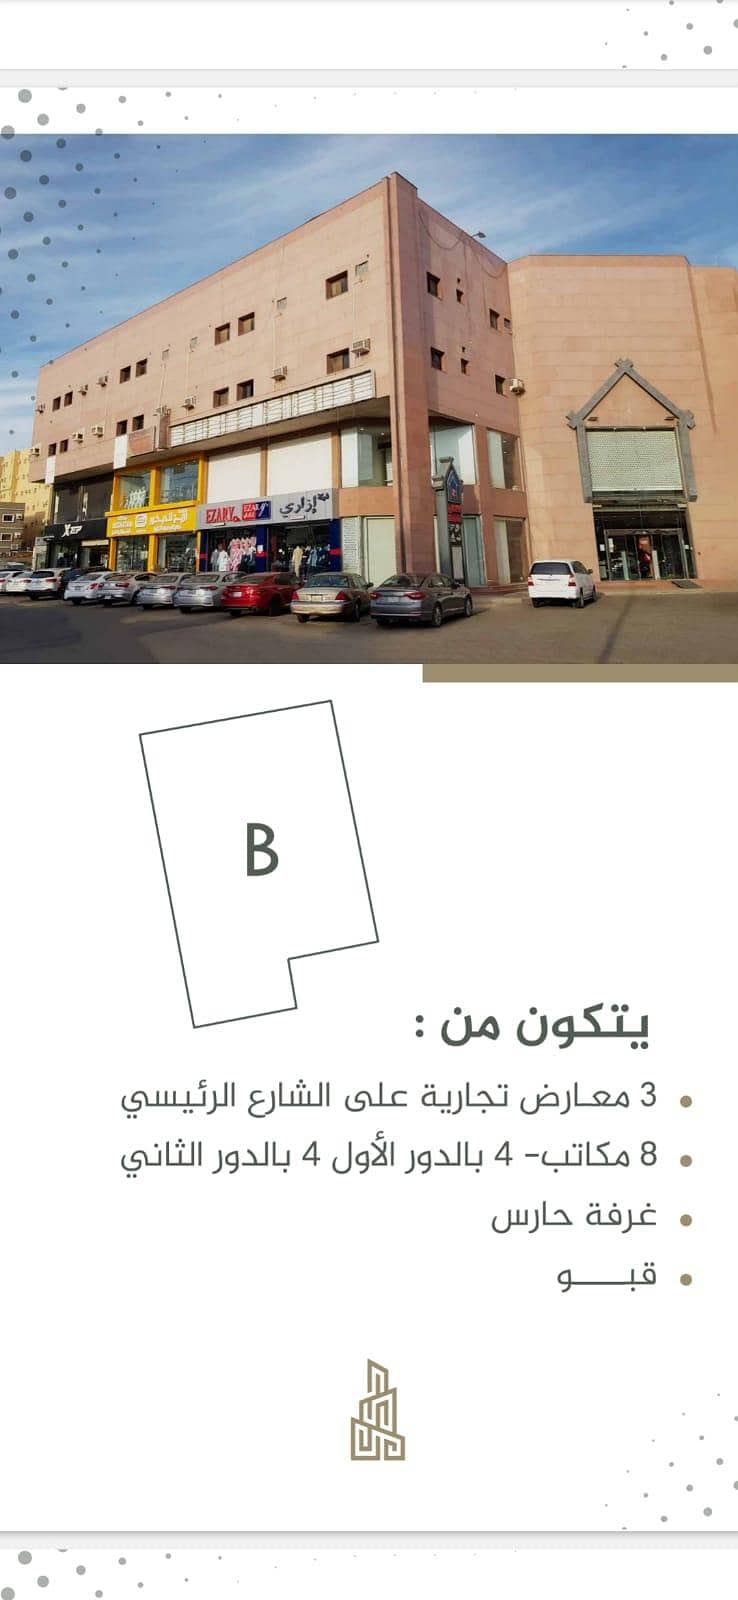 100-Room Building for Sale on Makrona Street, Jeddah